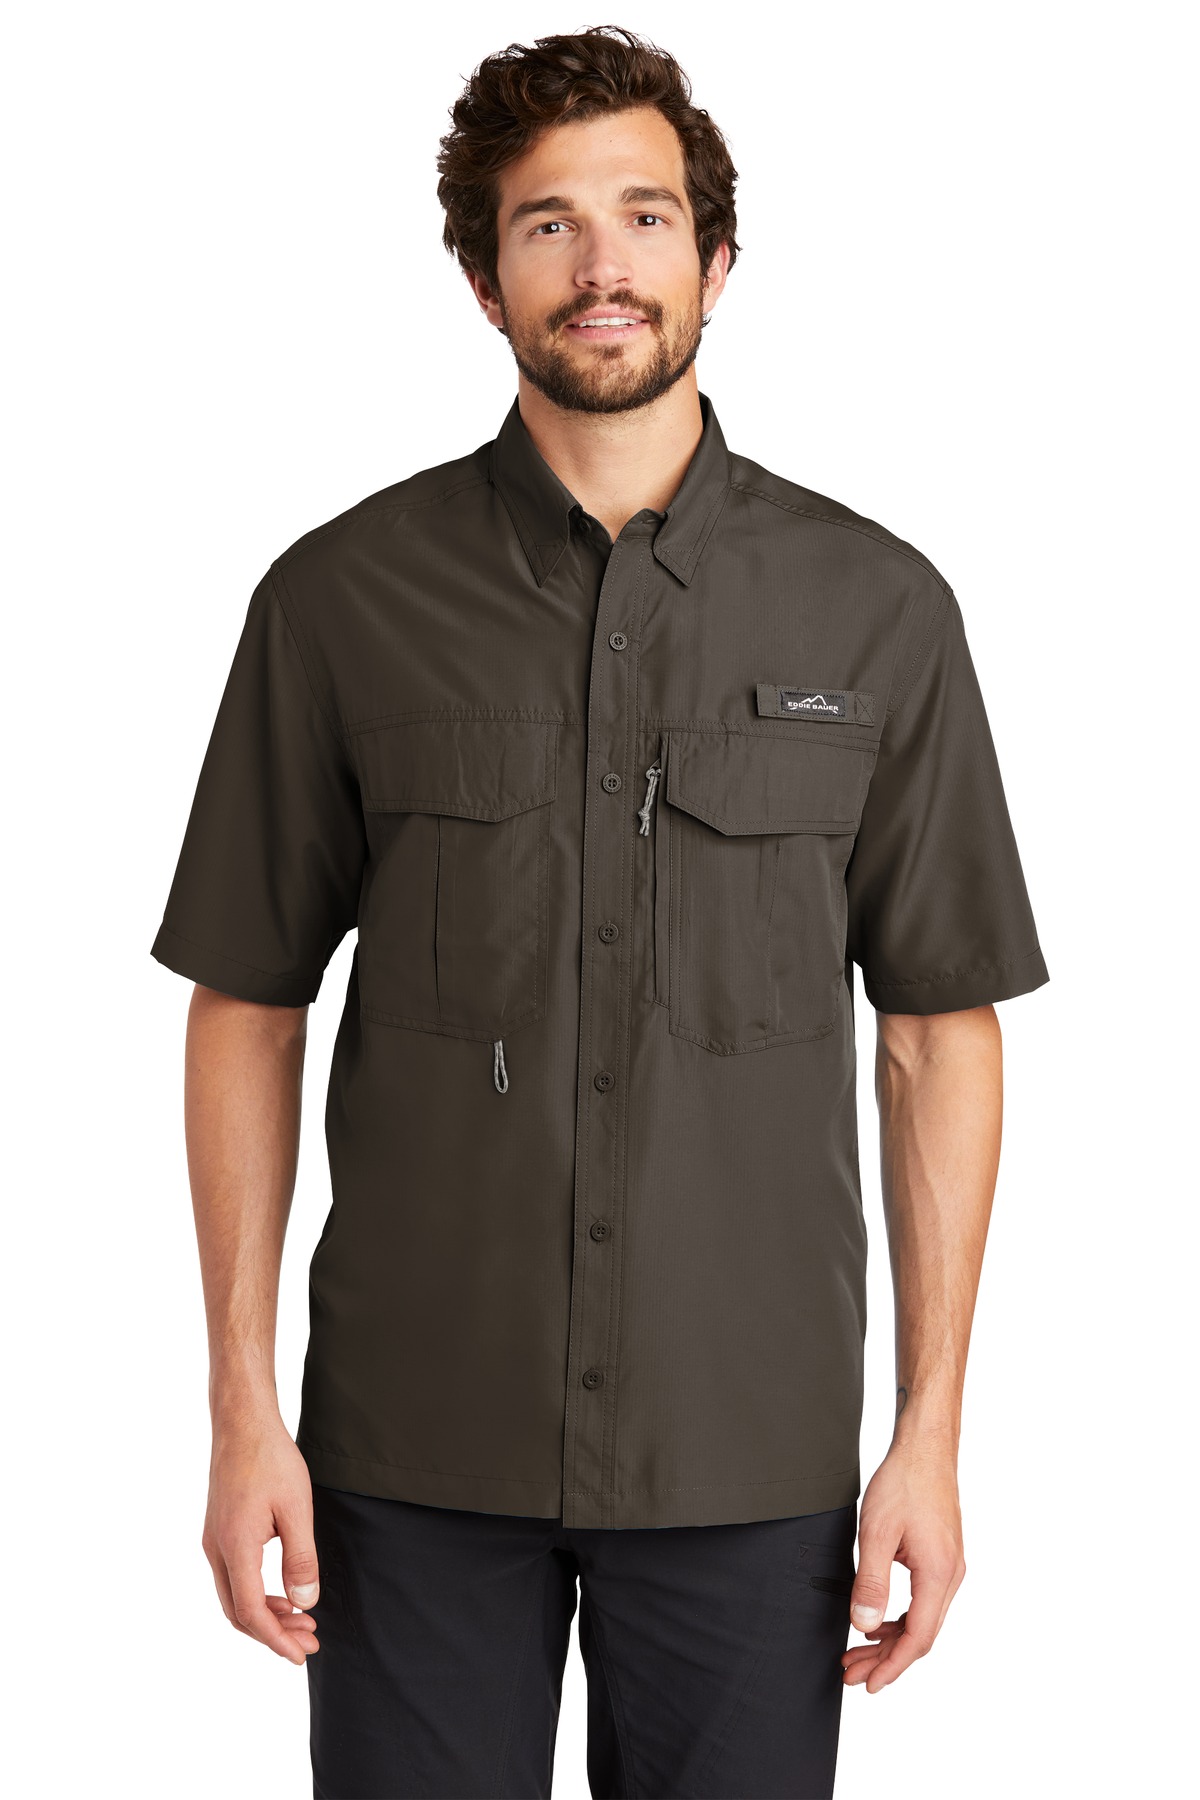 Eddie Bauer Woven Shirts for Hospitality ® - Short Sleeve Performance Fishing Shirt.-Eddie Bauer